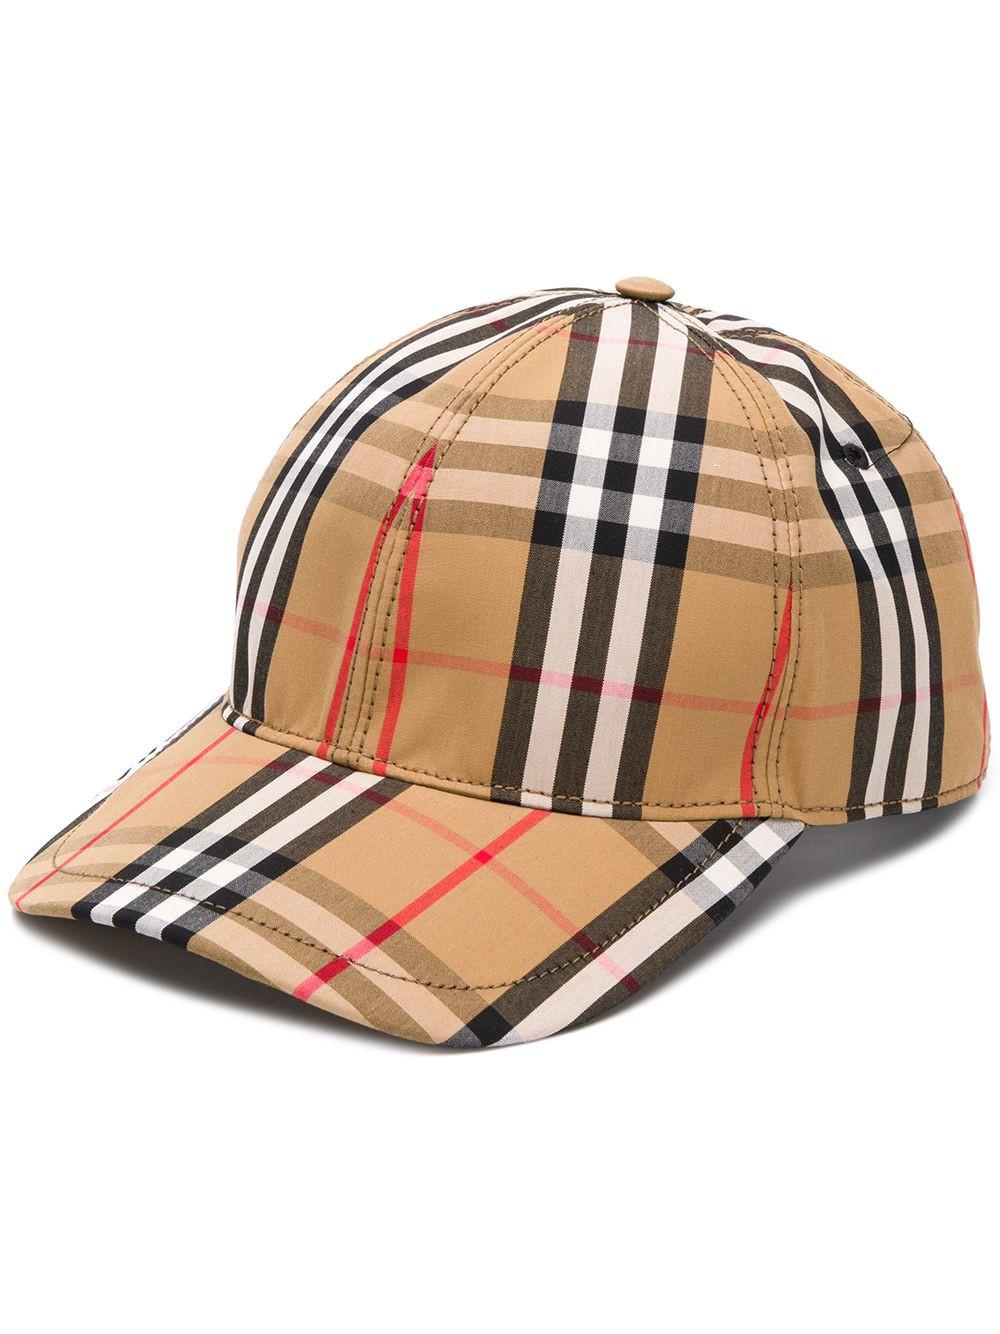 Burberry Cotton Classic Check Cap for Men - Lyst